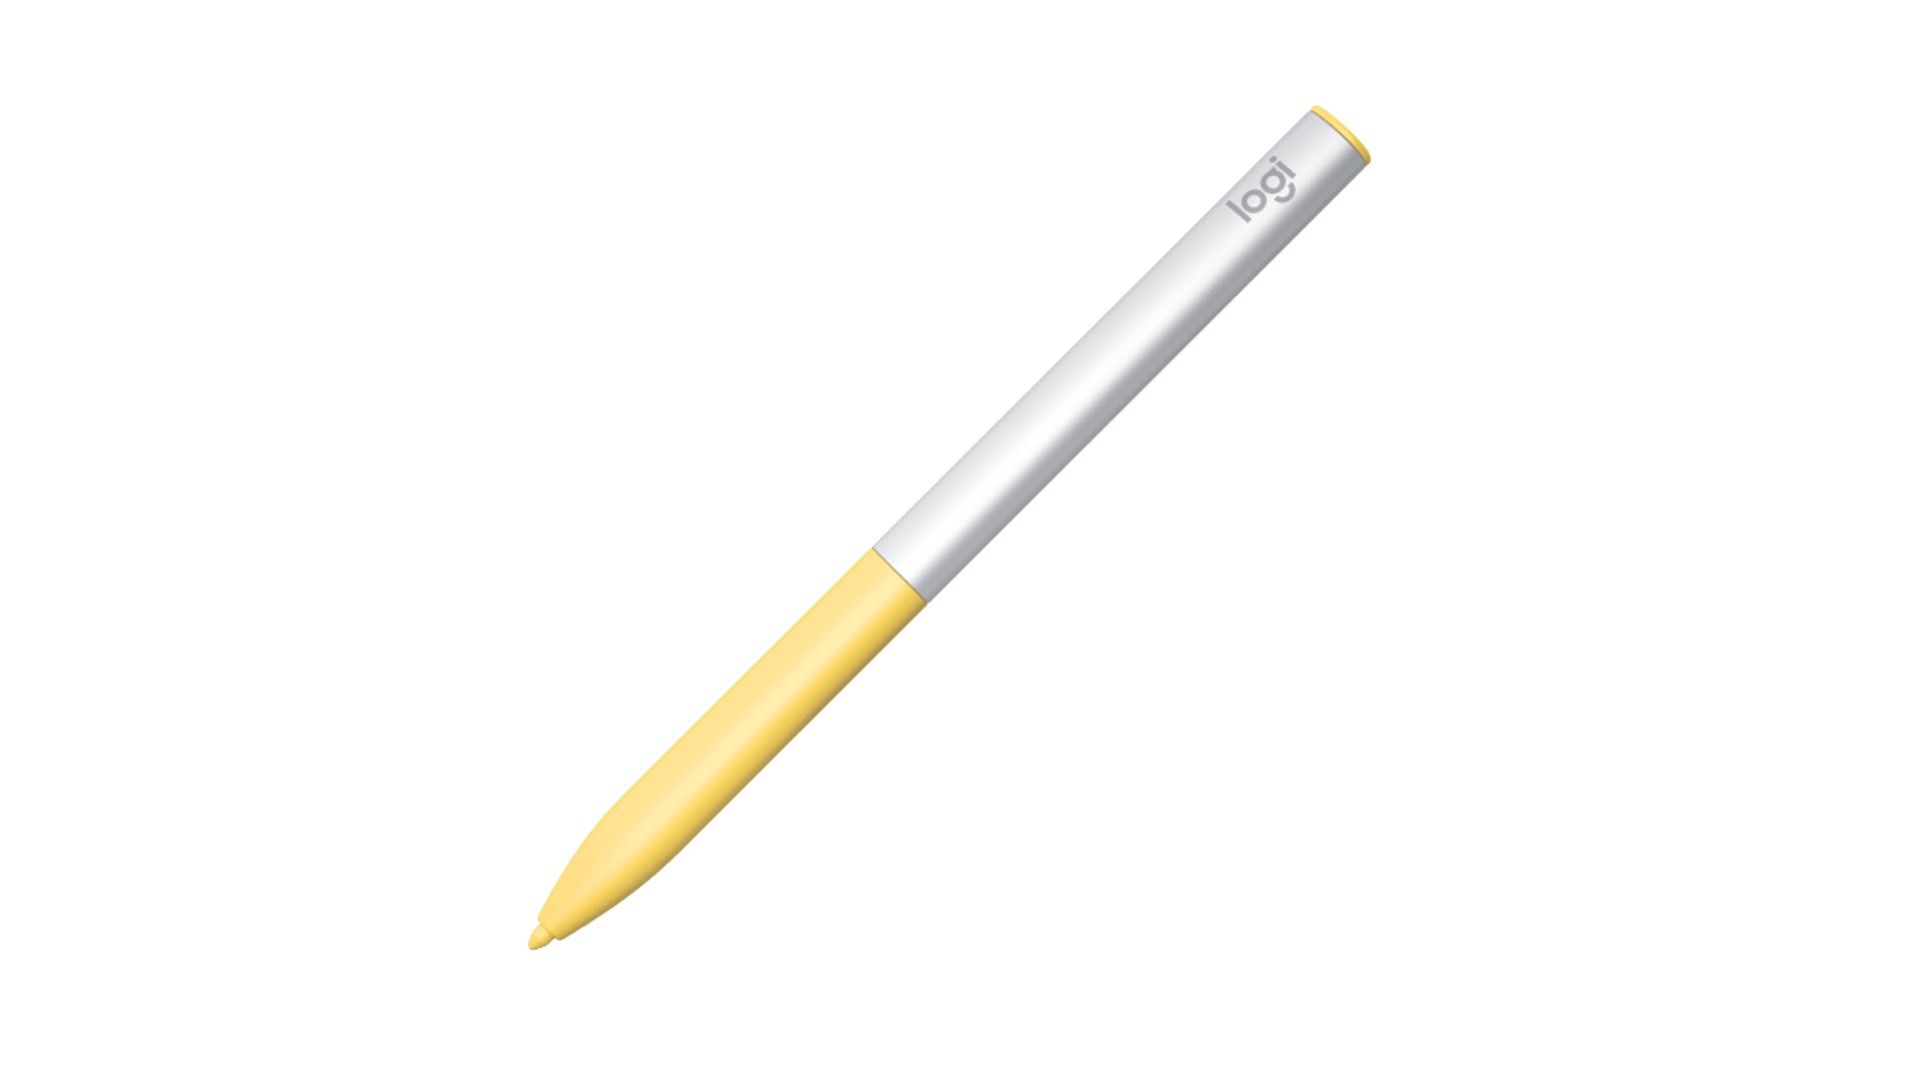 Logitech pen